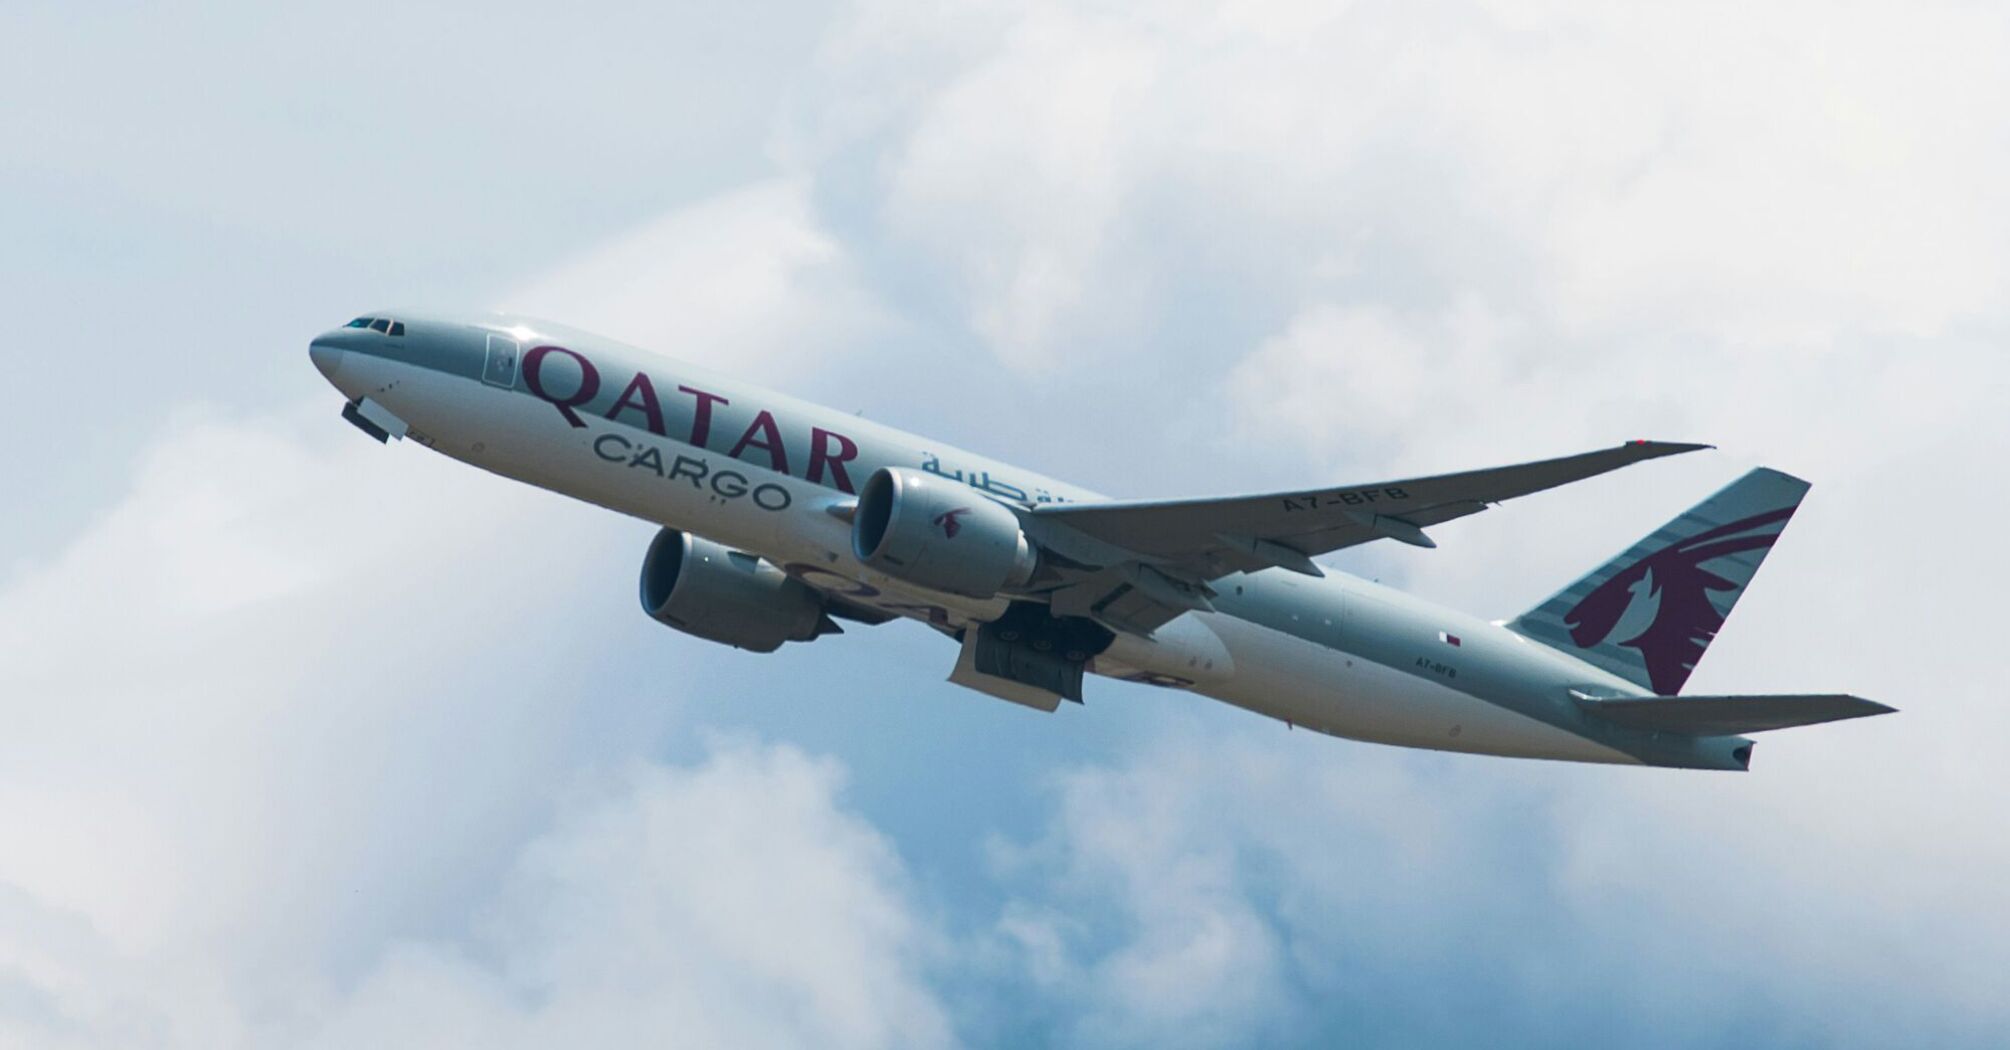 Qatar airways plane takes off